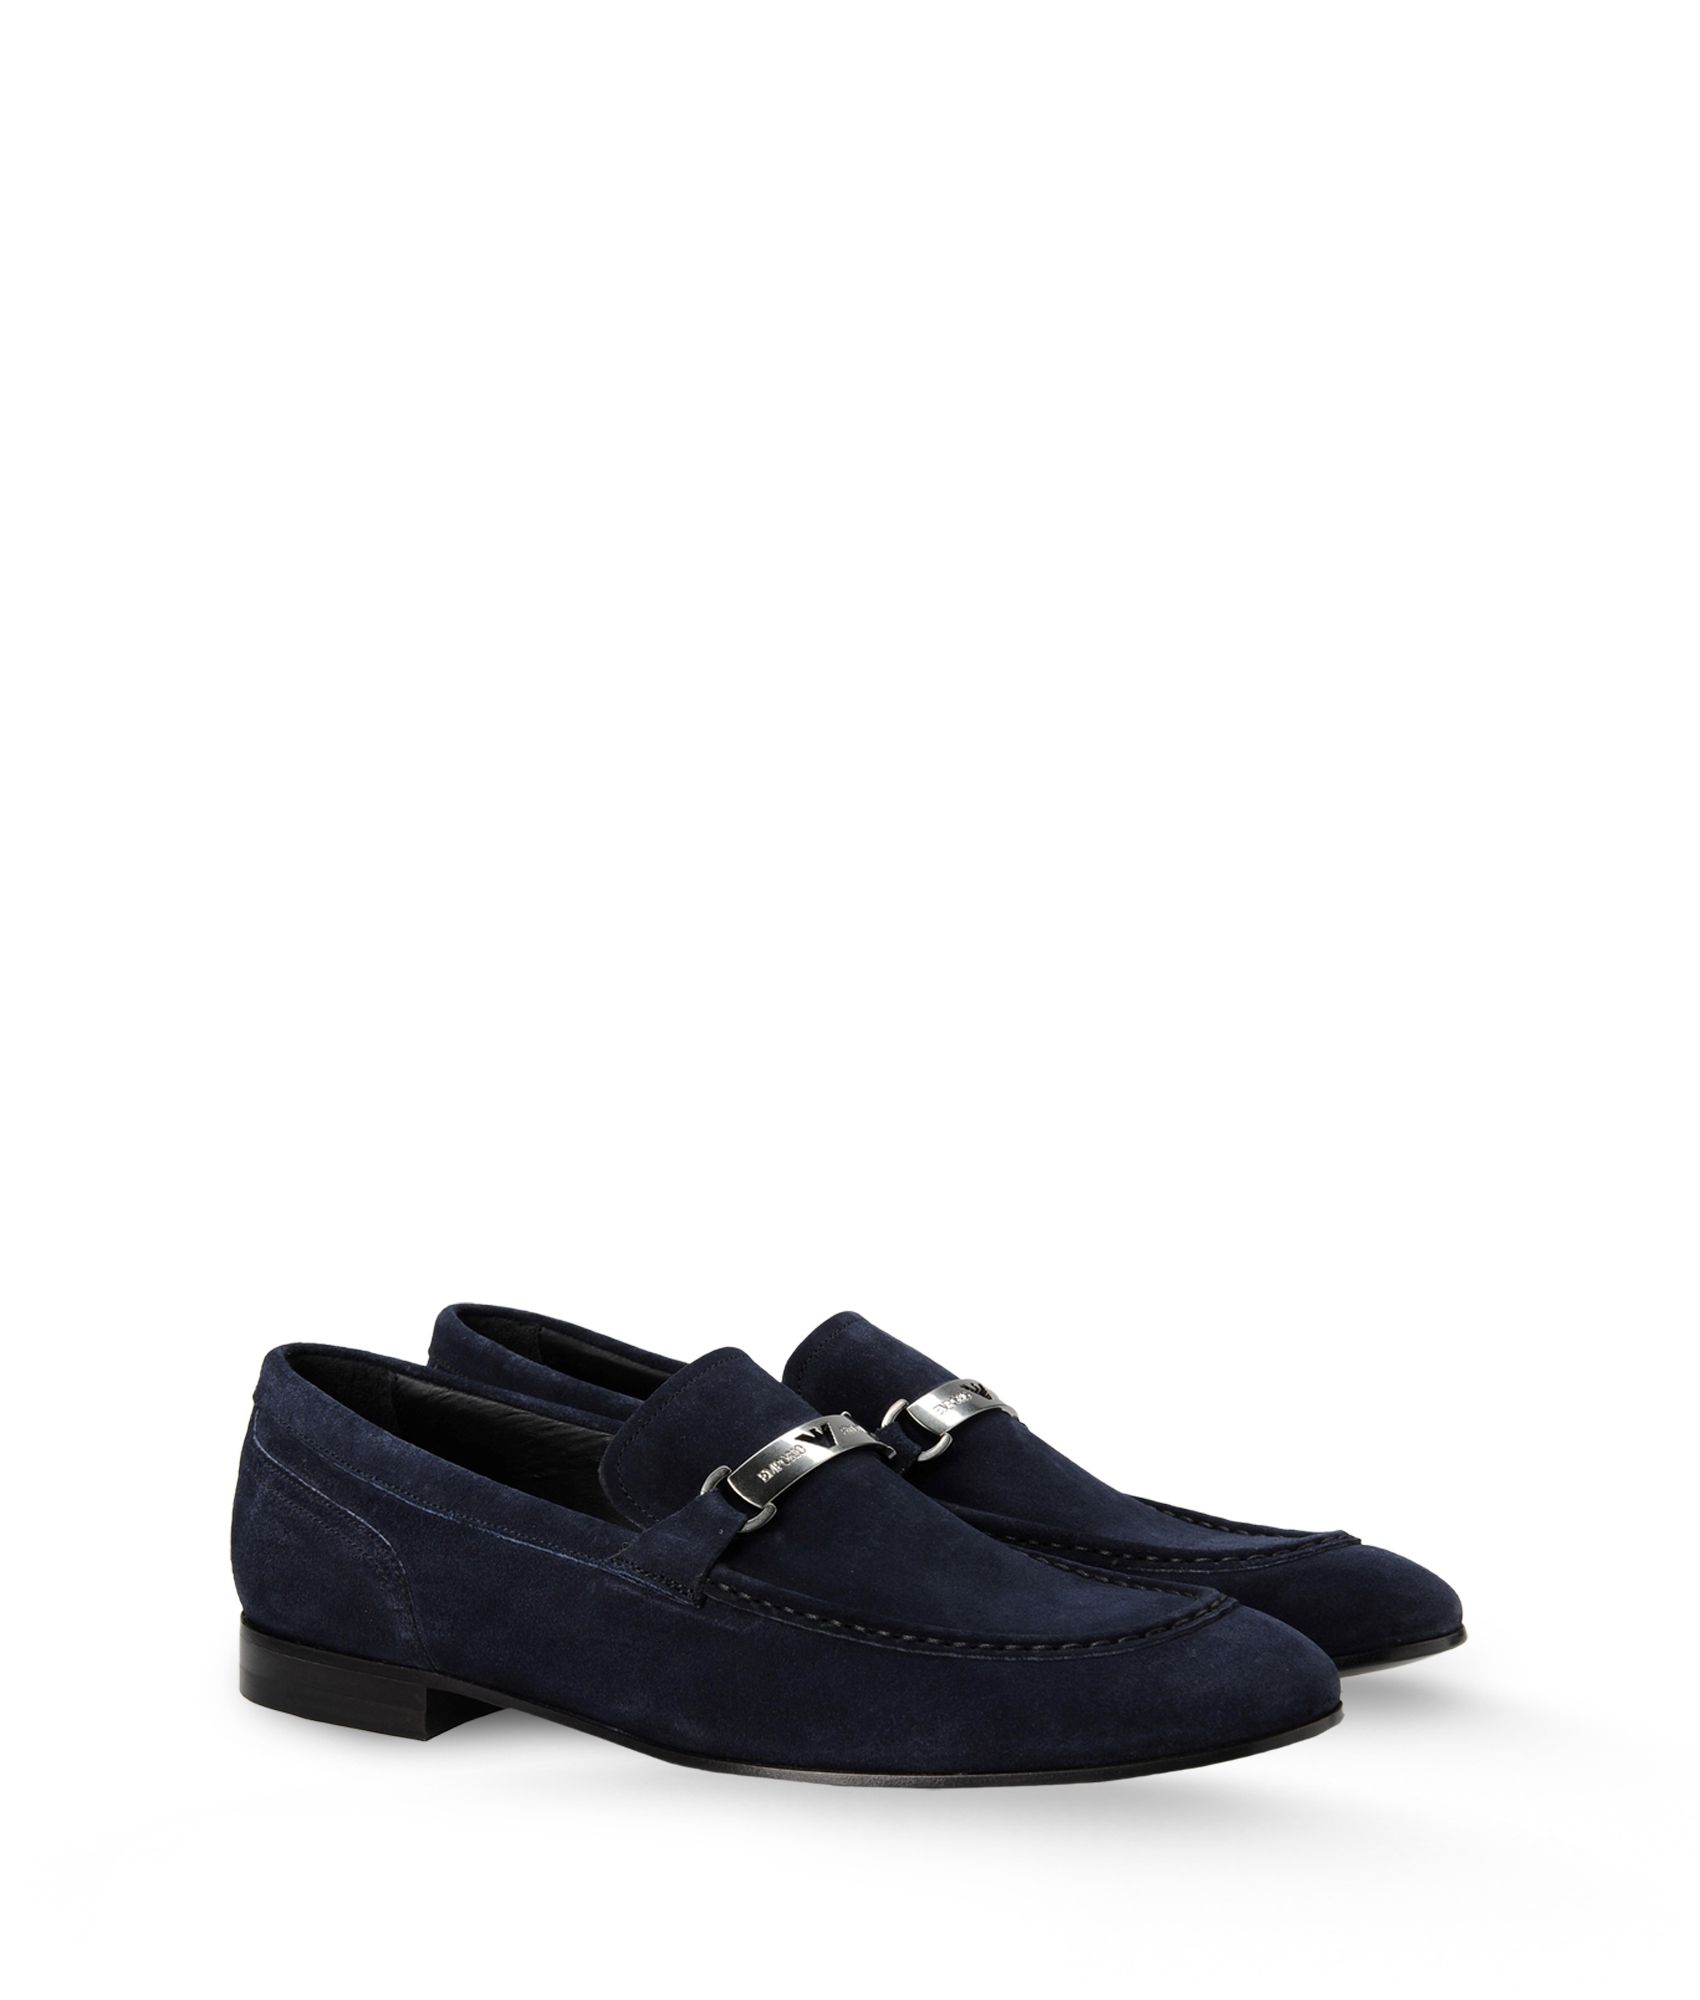 Emporio Armani Loafers in Dark Blue (Blue) for Men - Lyst